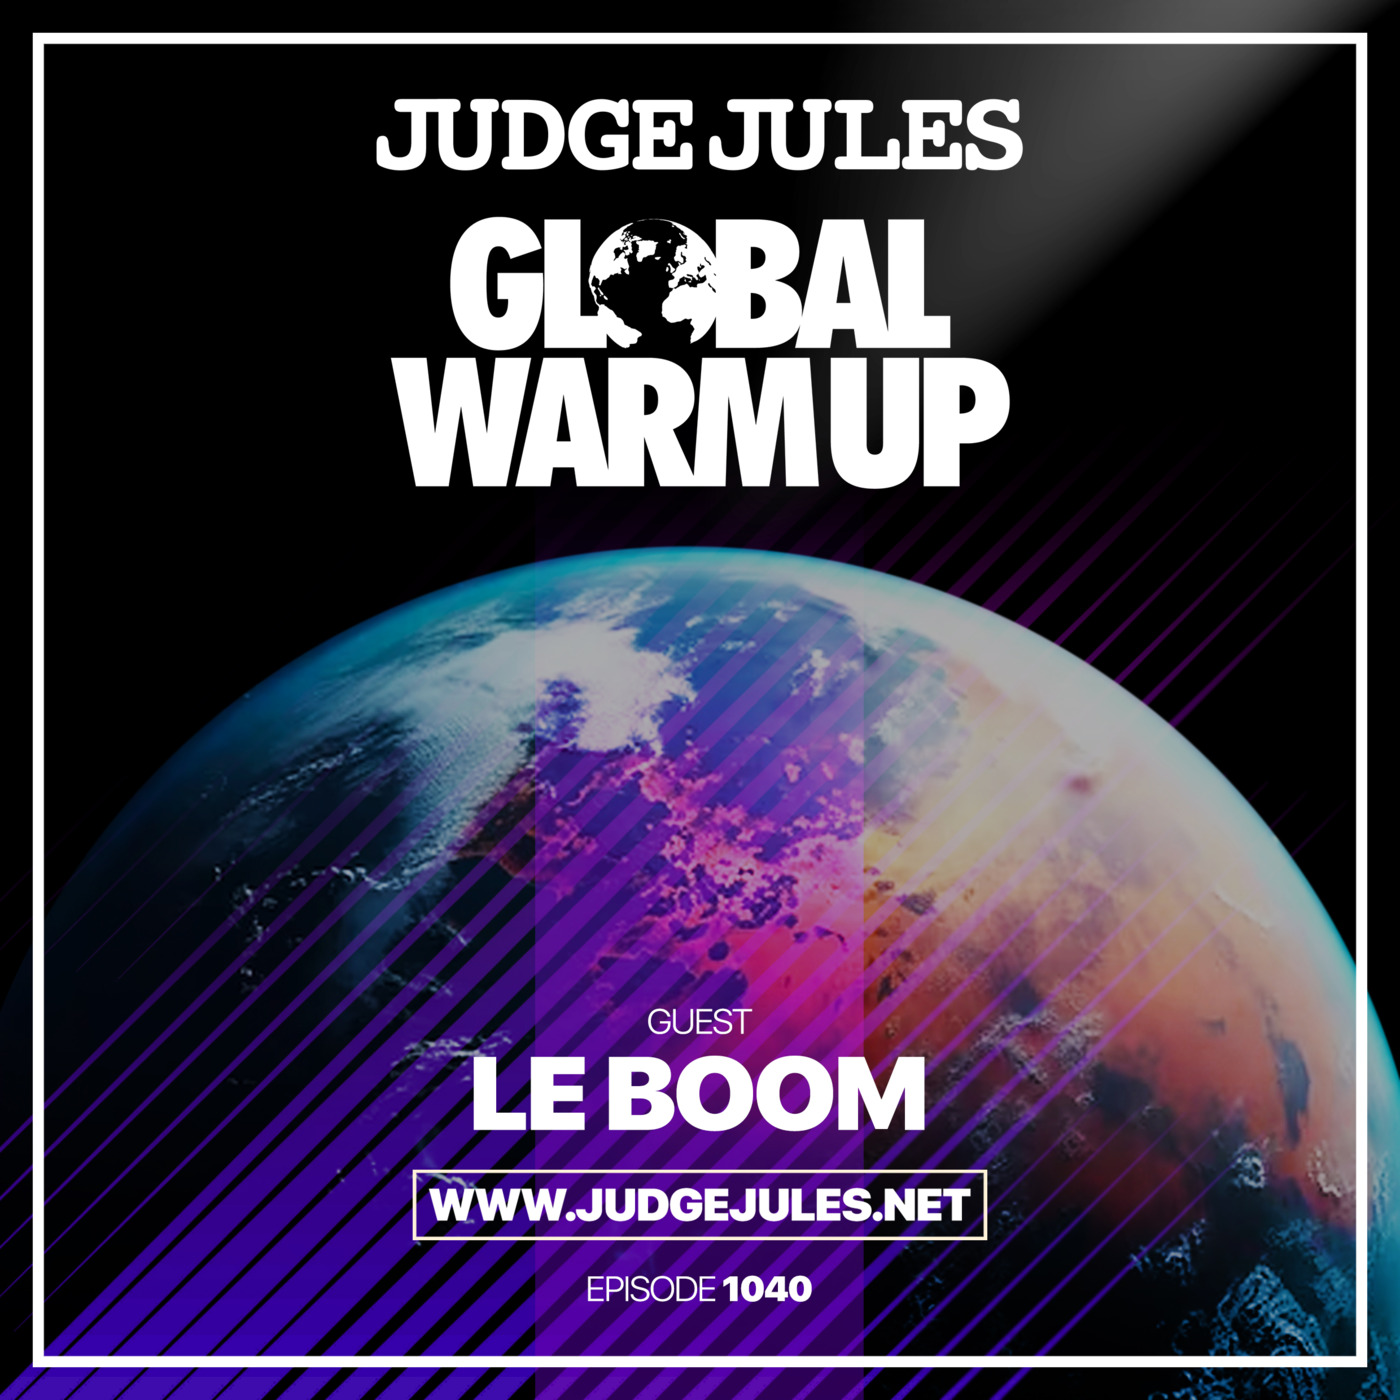 Episode 1040: JUDGE JULES PRESENTS THE GLOBAL WARM UP EPISODE 1040